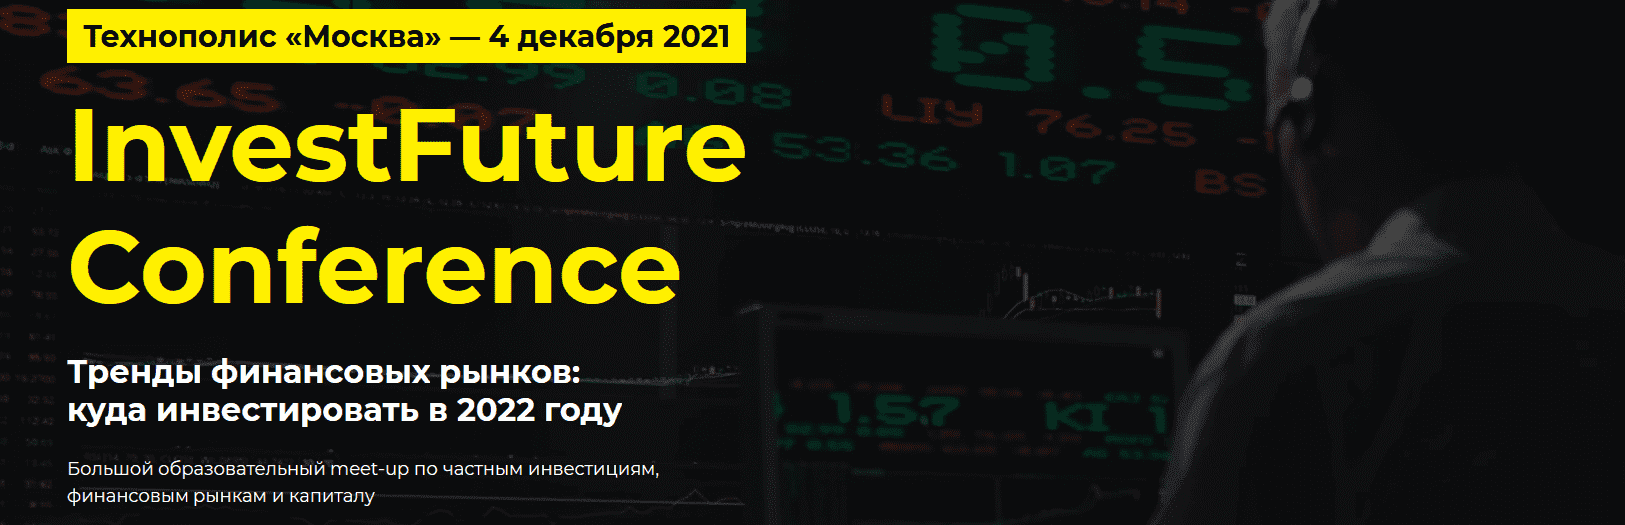 Скачать - Технополис «Москва» - InvestFuture Conference (2021).png